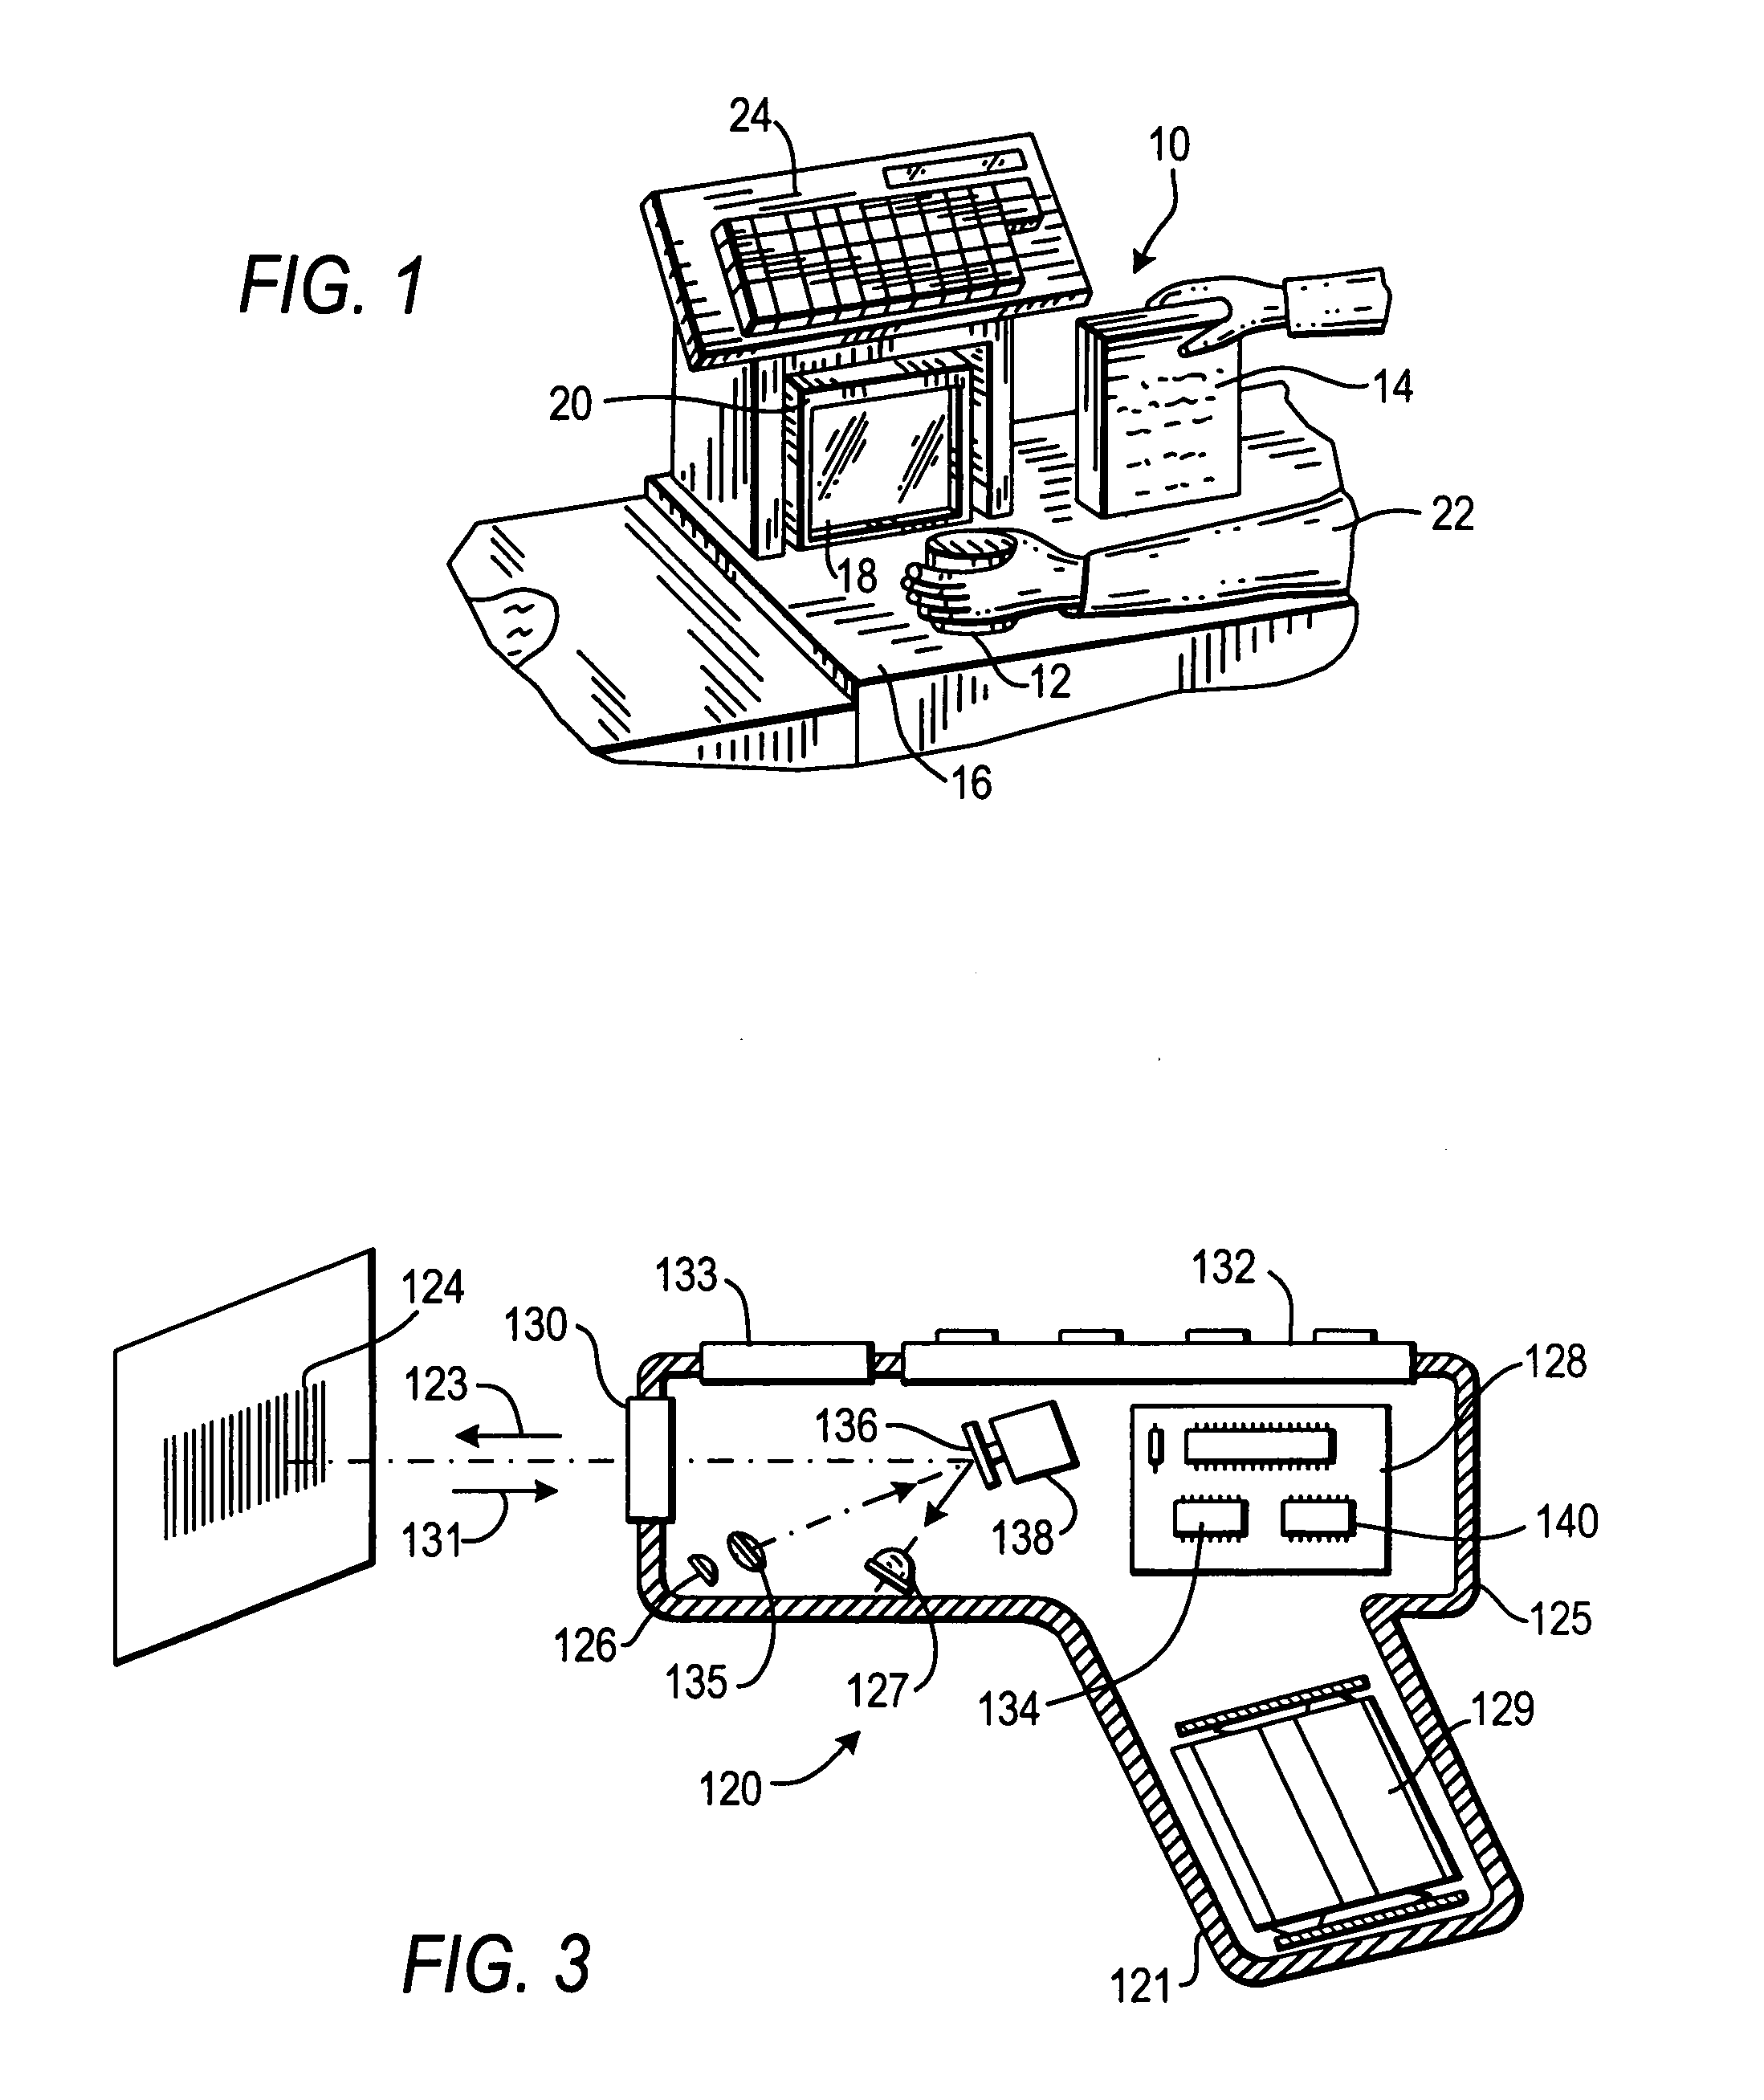 Triggerless electro-optical reader